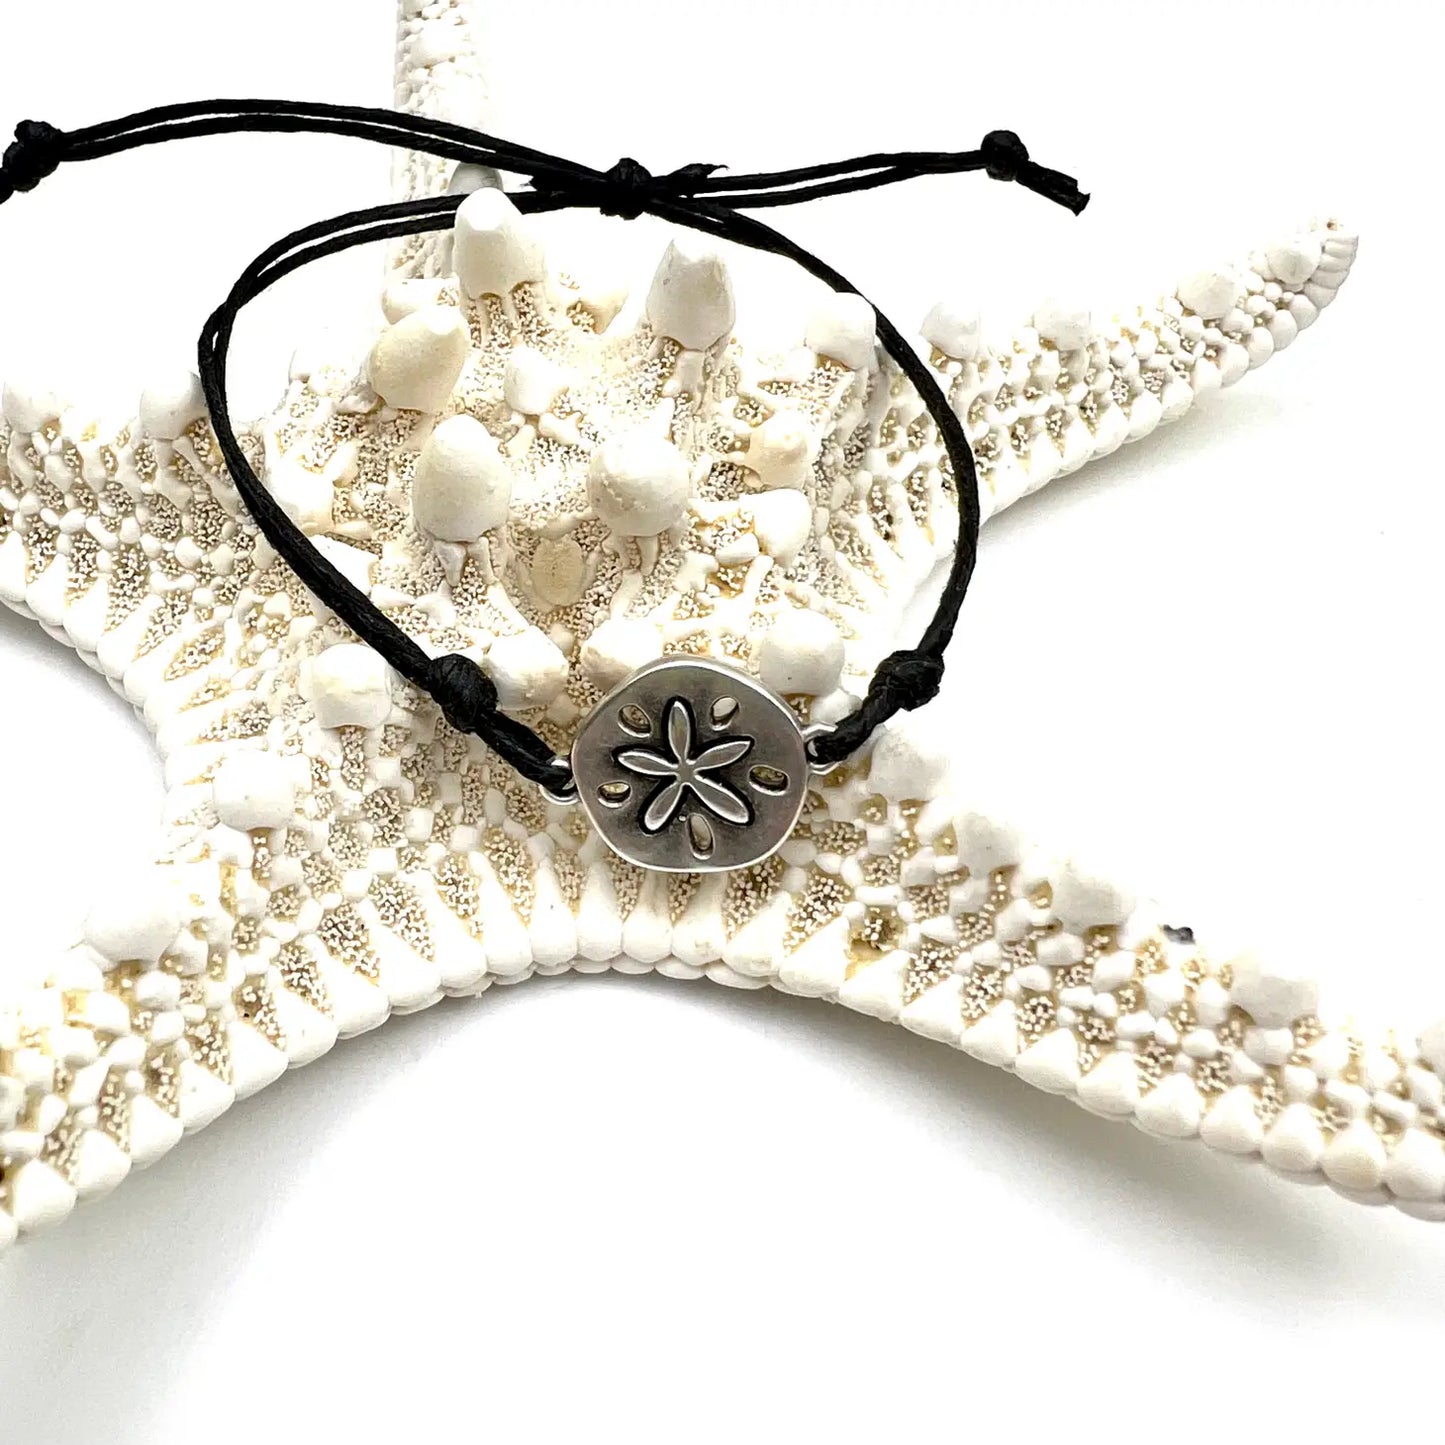 Jackie Gallagher Designs - Waxed Cord Beach Charm Bracelets